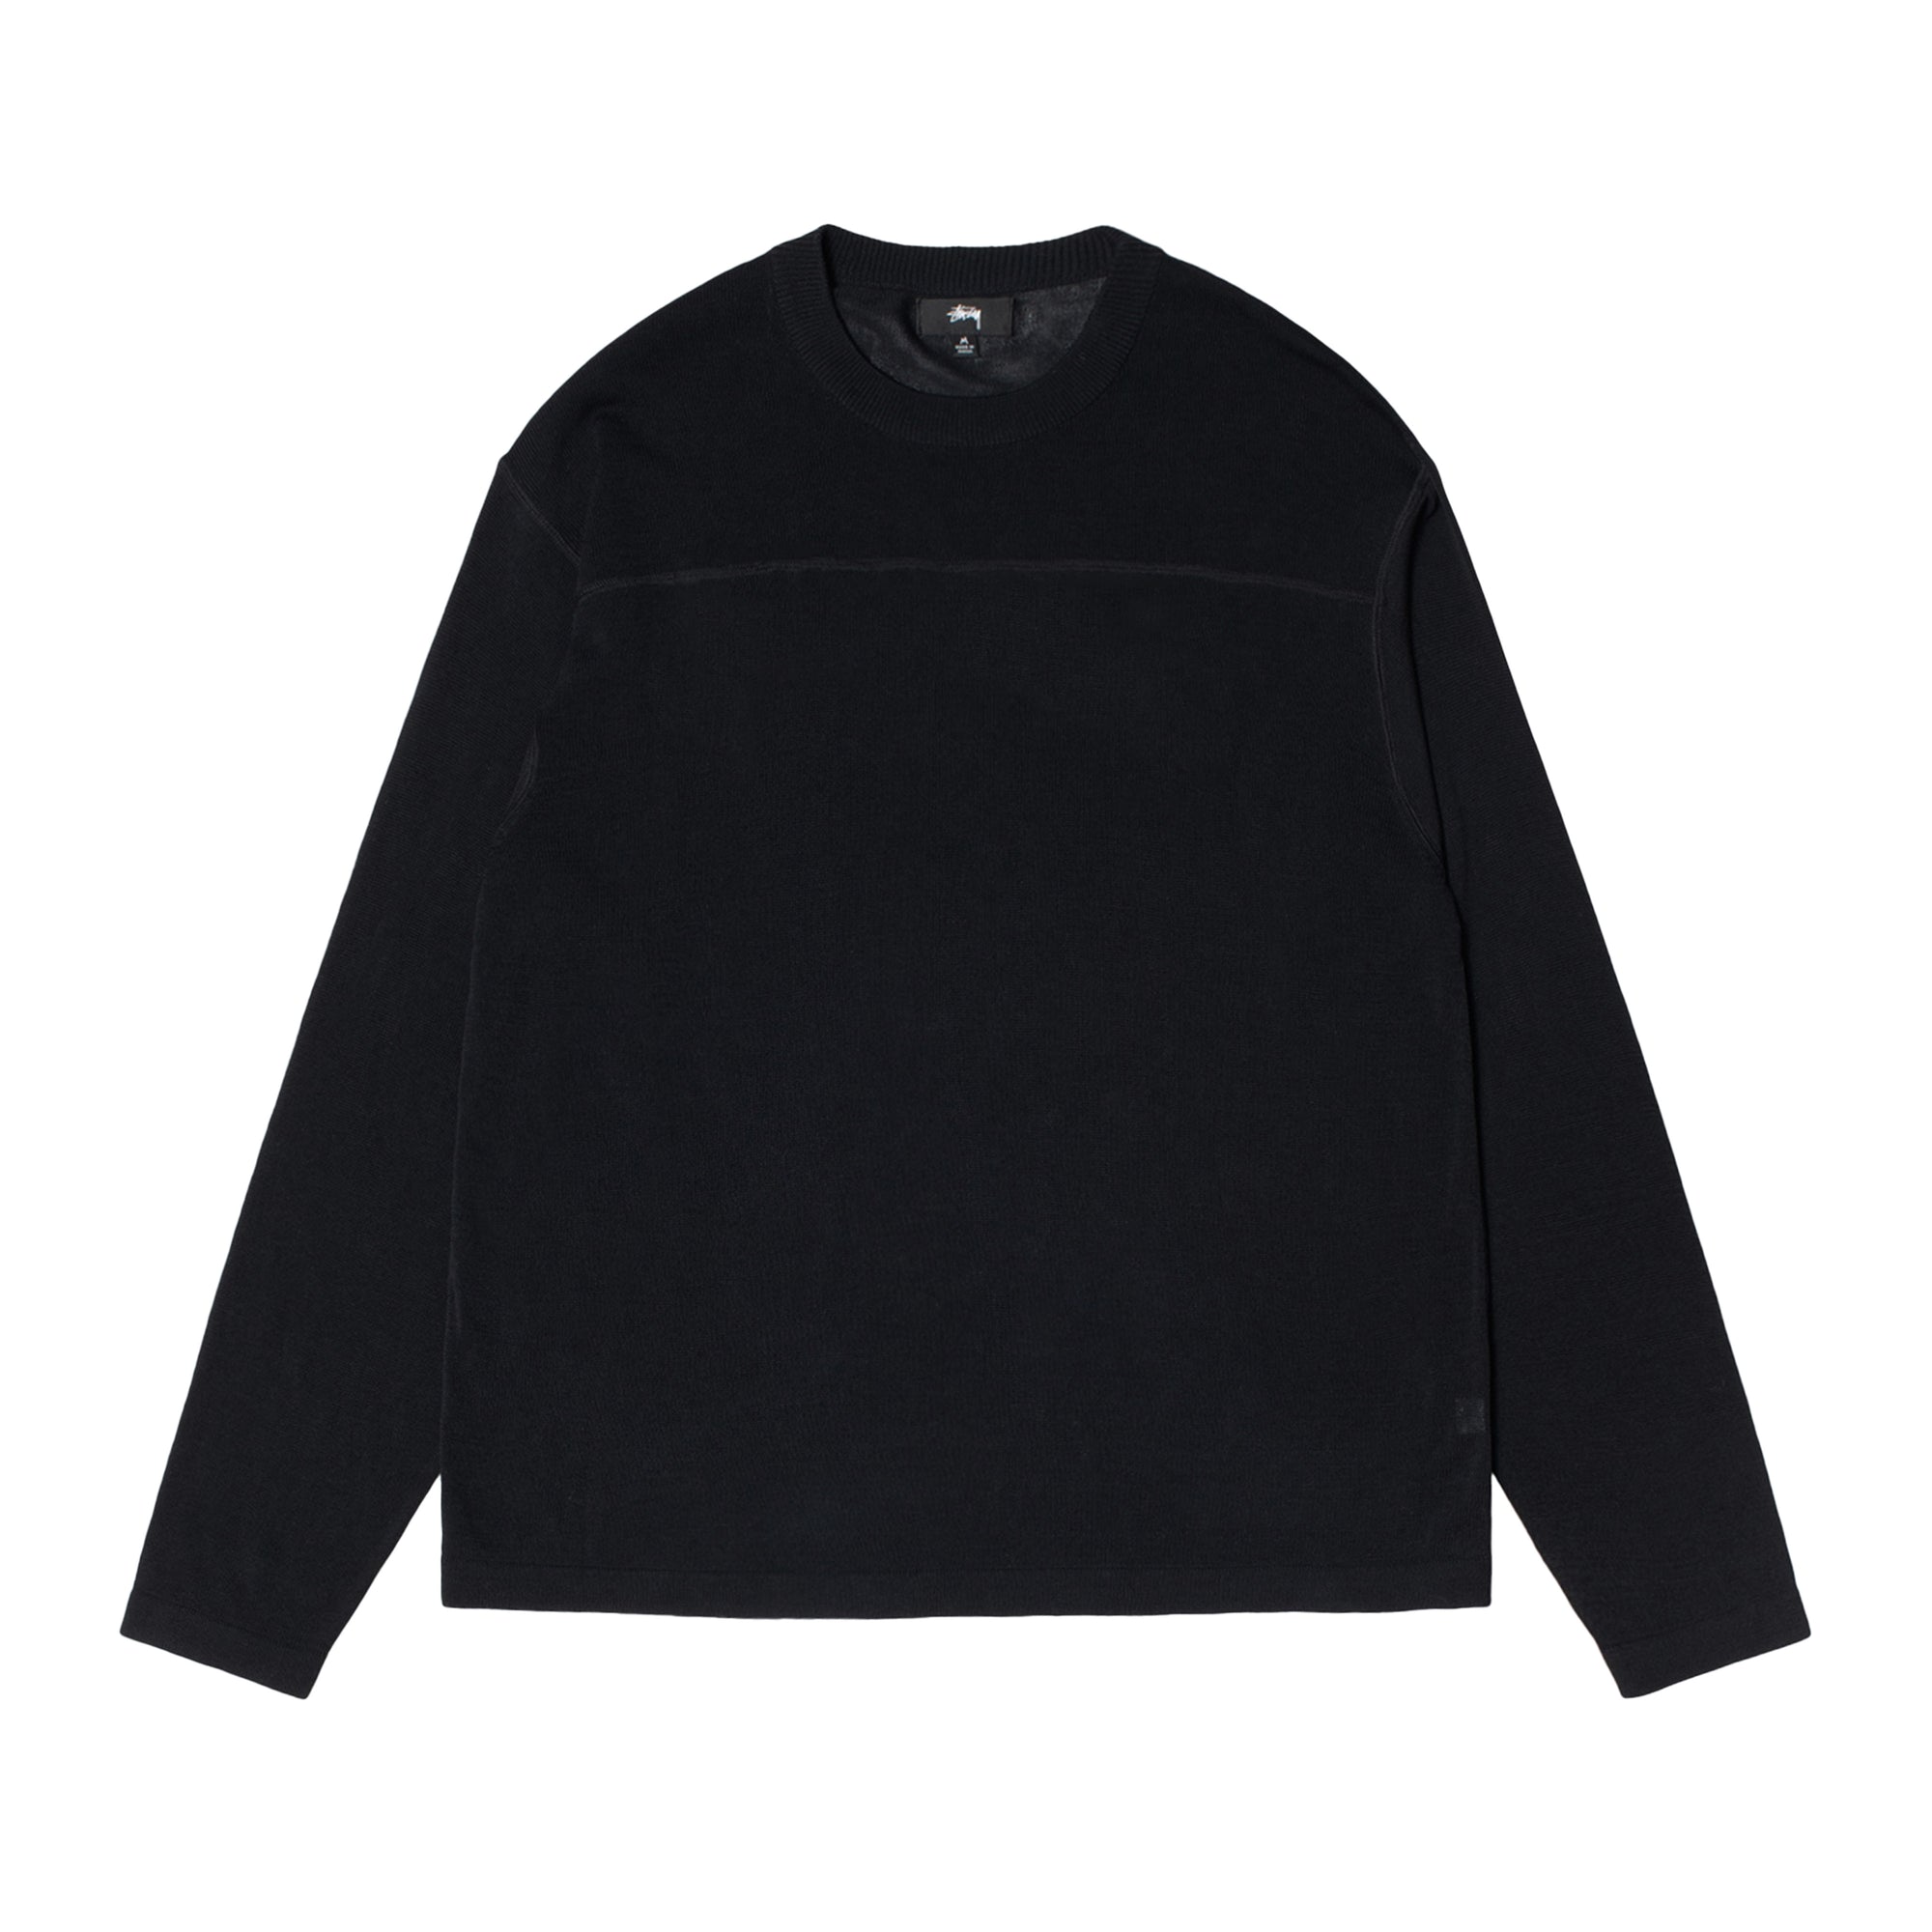 Stüssy - Football Sweater - (Black) view 2